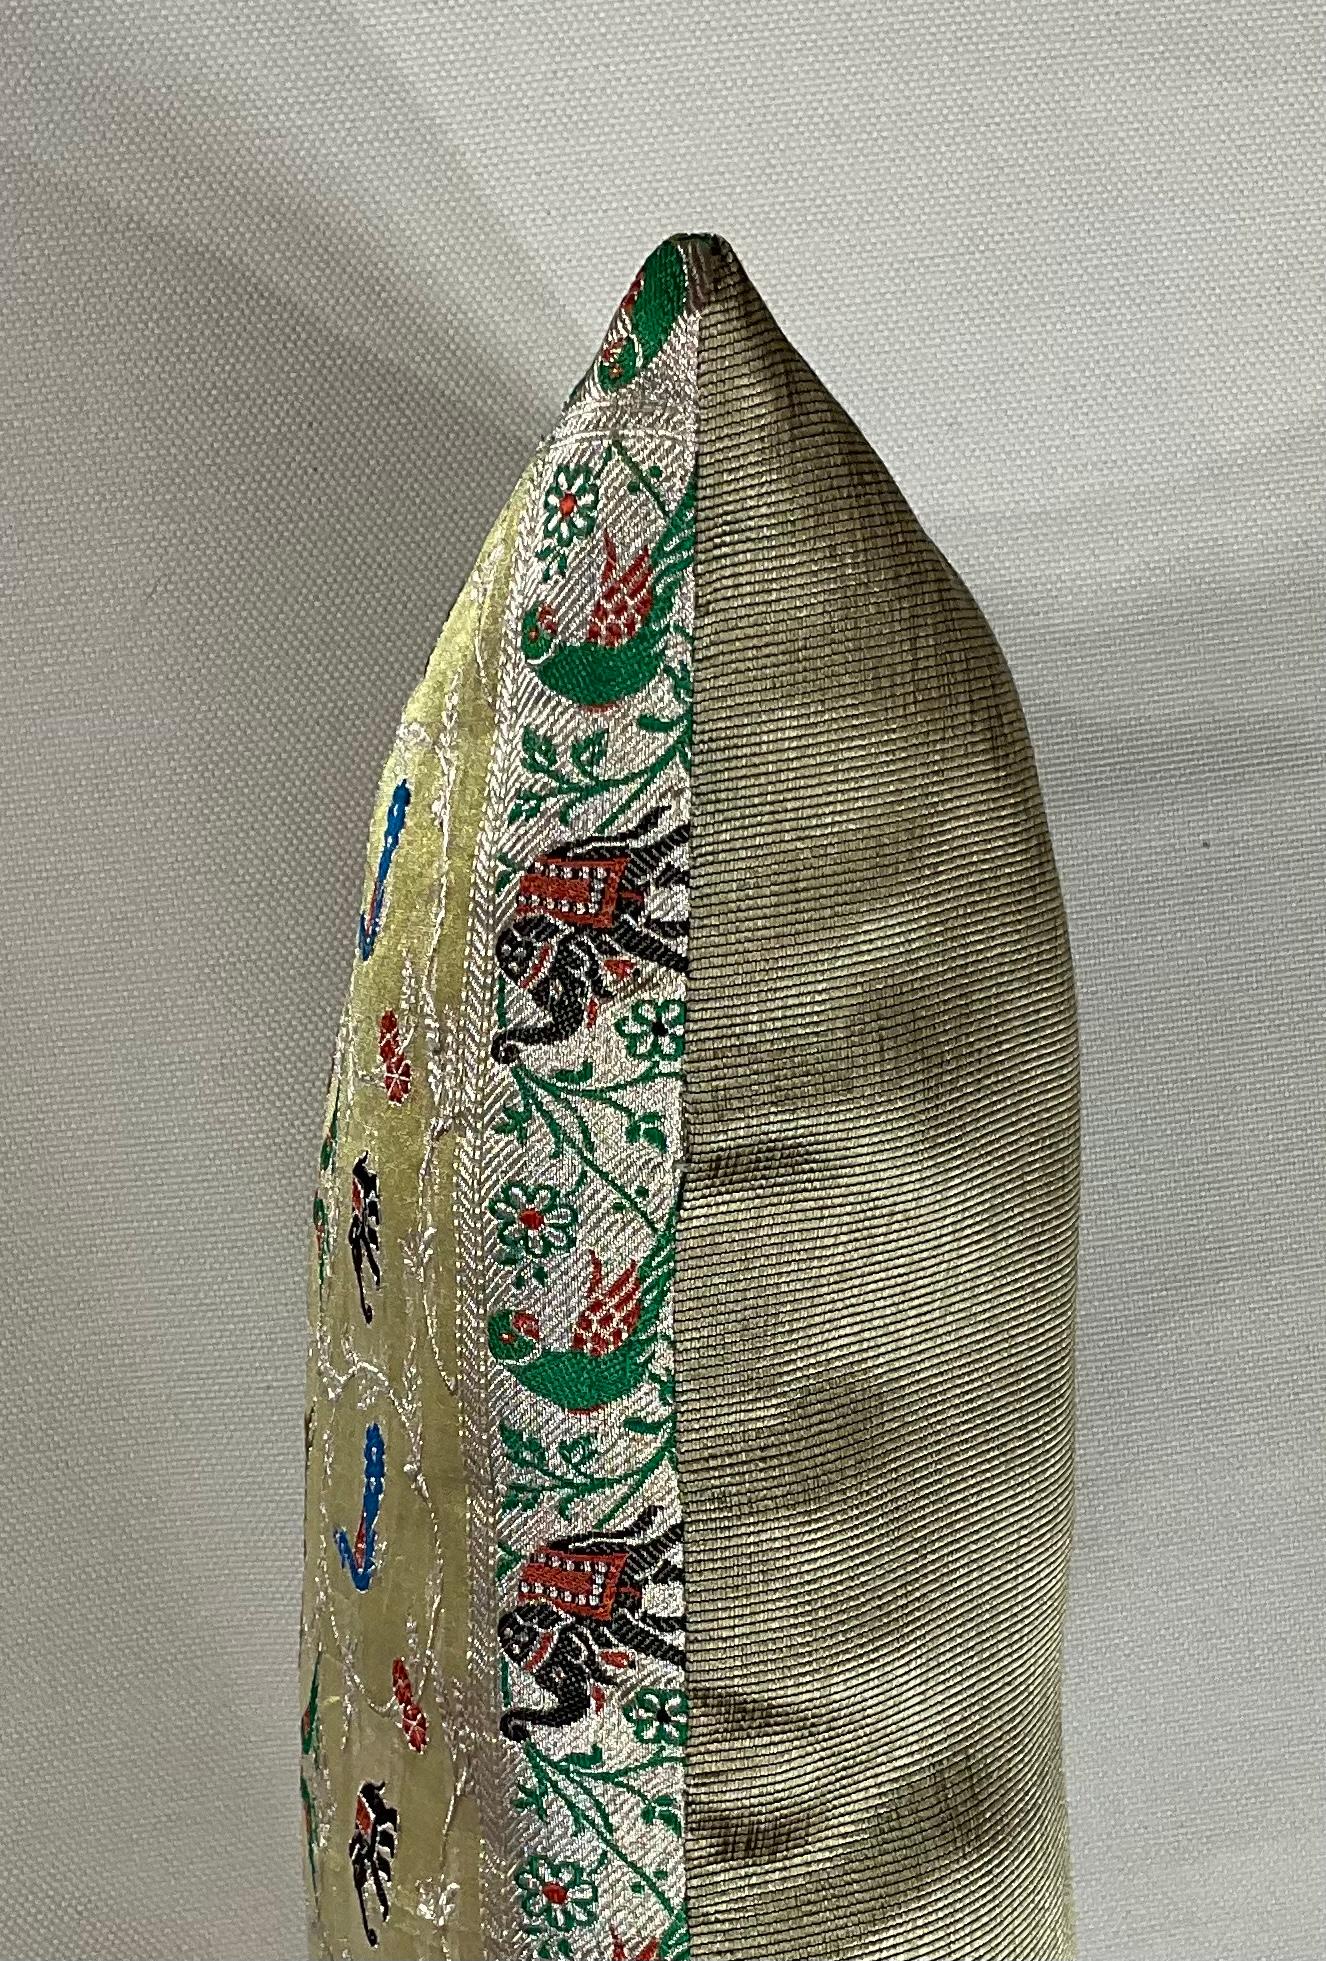 Single Vintage Embroidery Textile Pillow  1